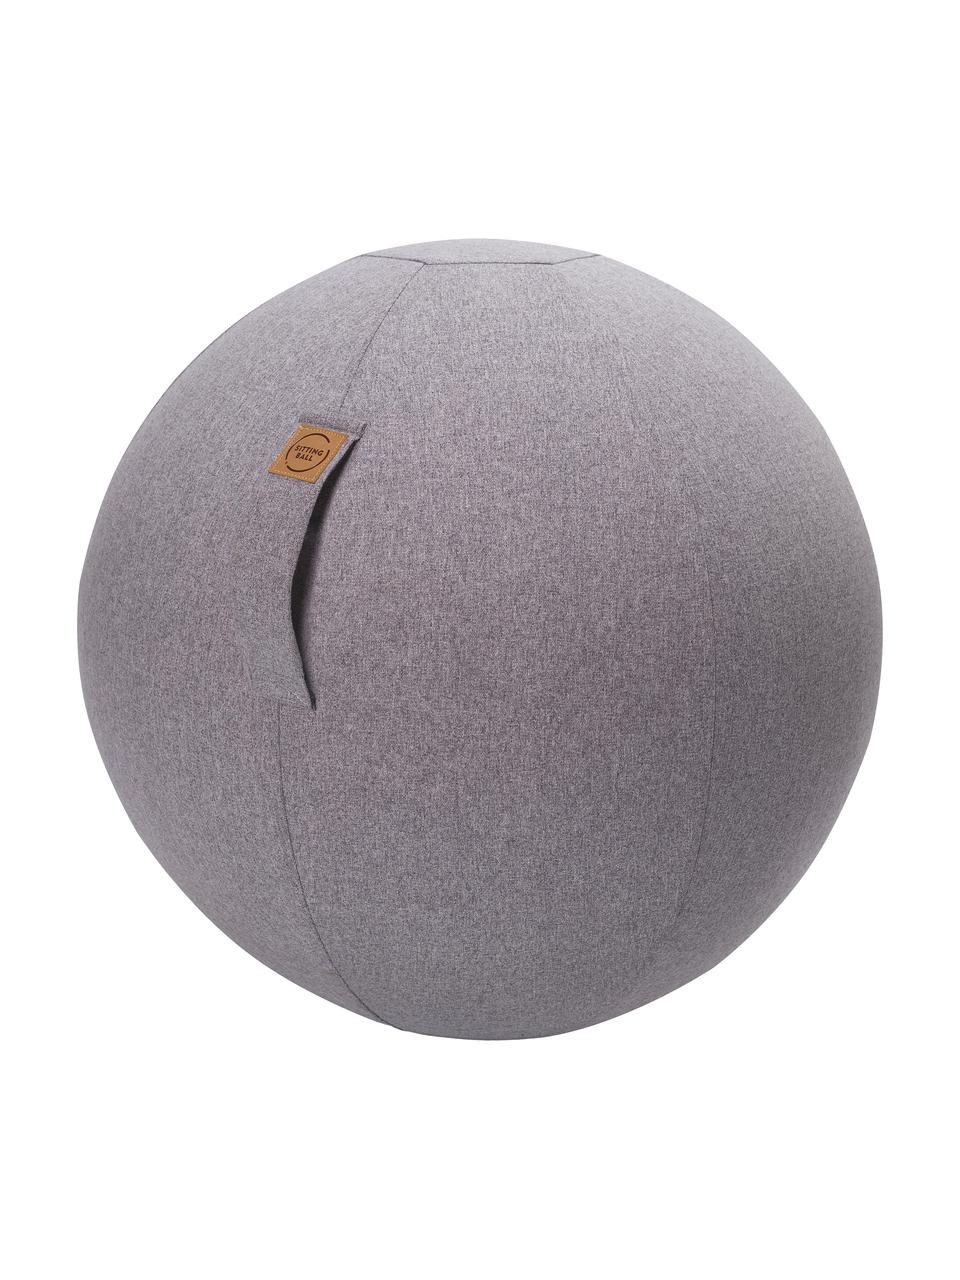 Gym ball textile Felt, Gris clair, Ø 65 cm